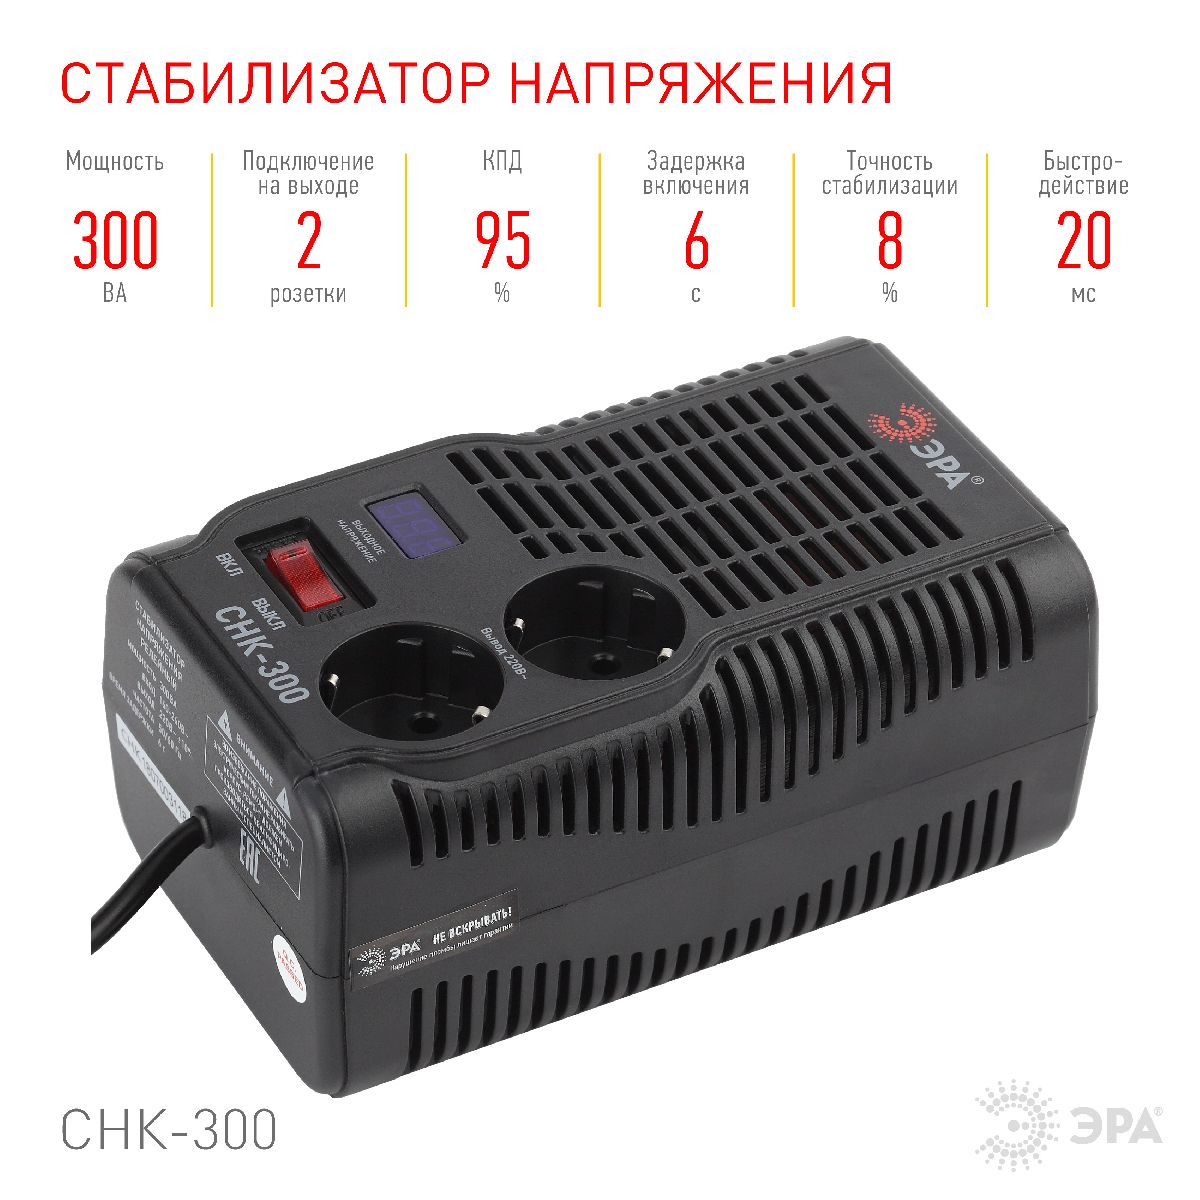 Стабилизатор Эра СНК-300 Б0031555